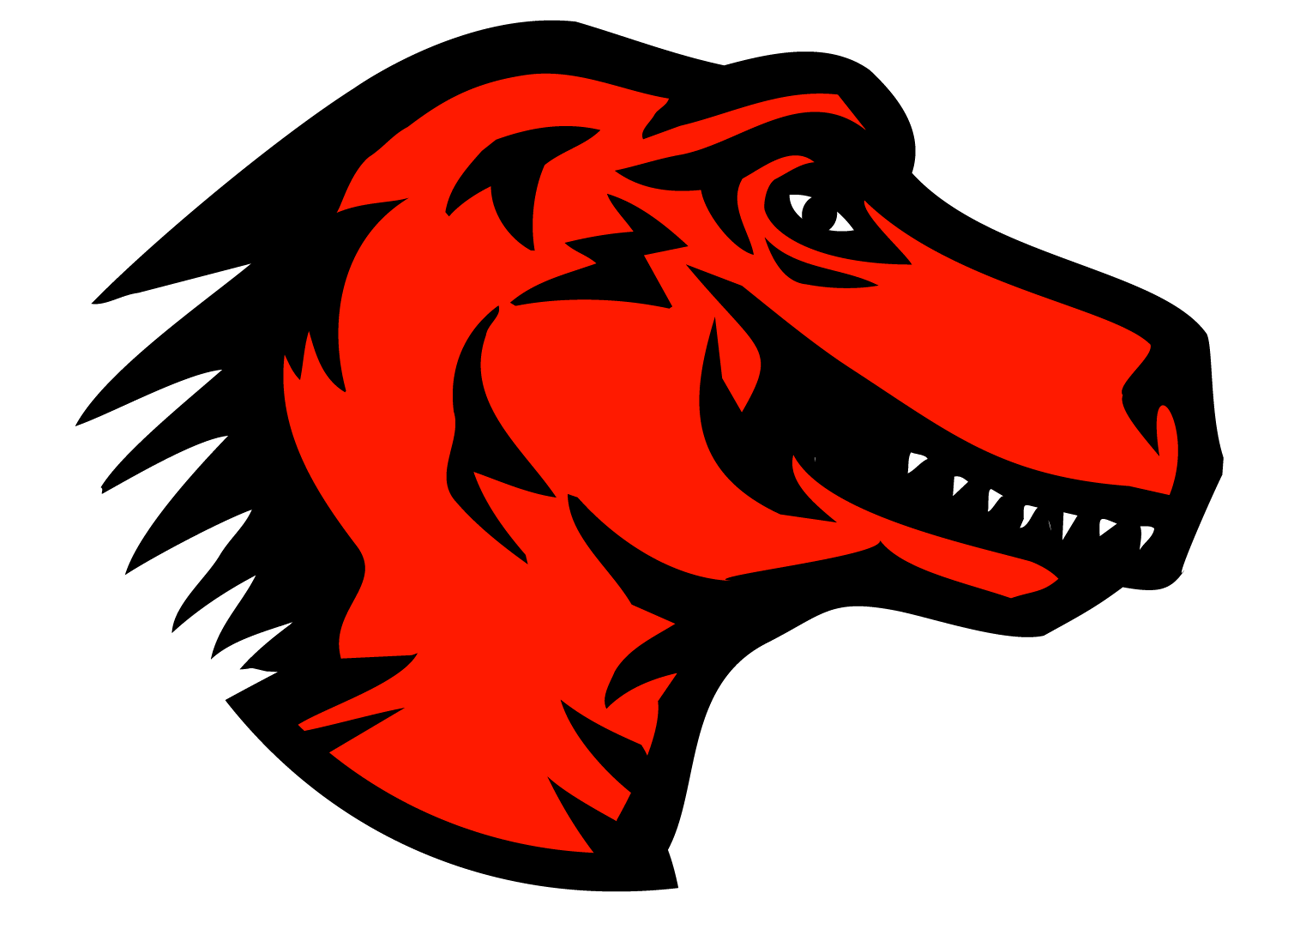 Original Firefox Logo - File:Mozilla dinosaur head logo.png - Wikimedia Commons